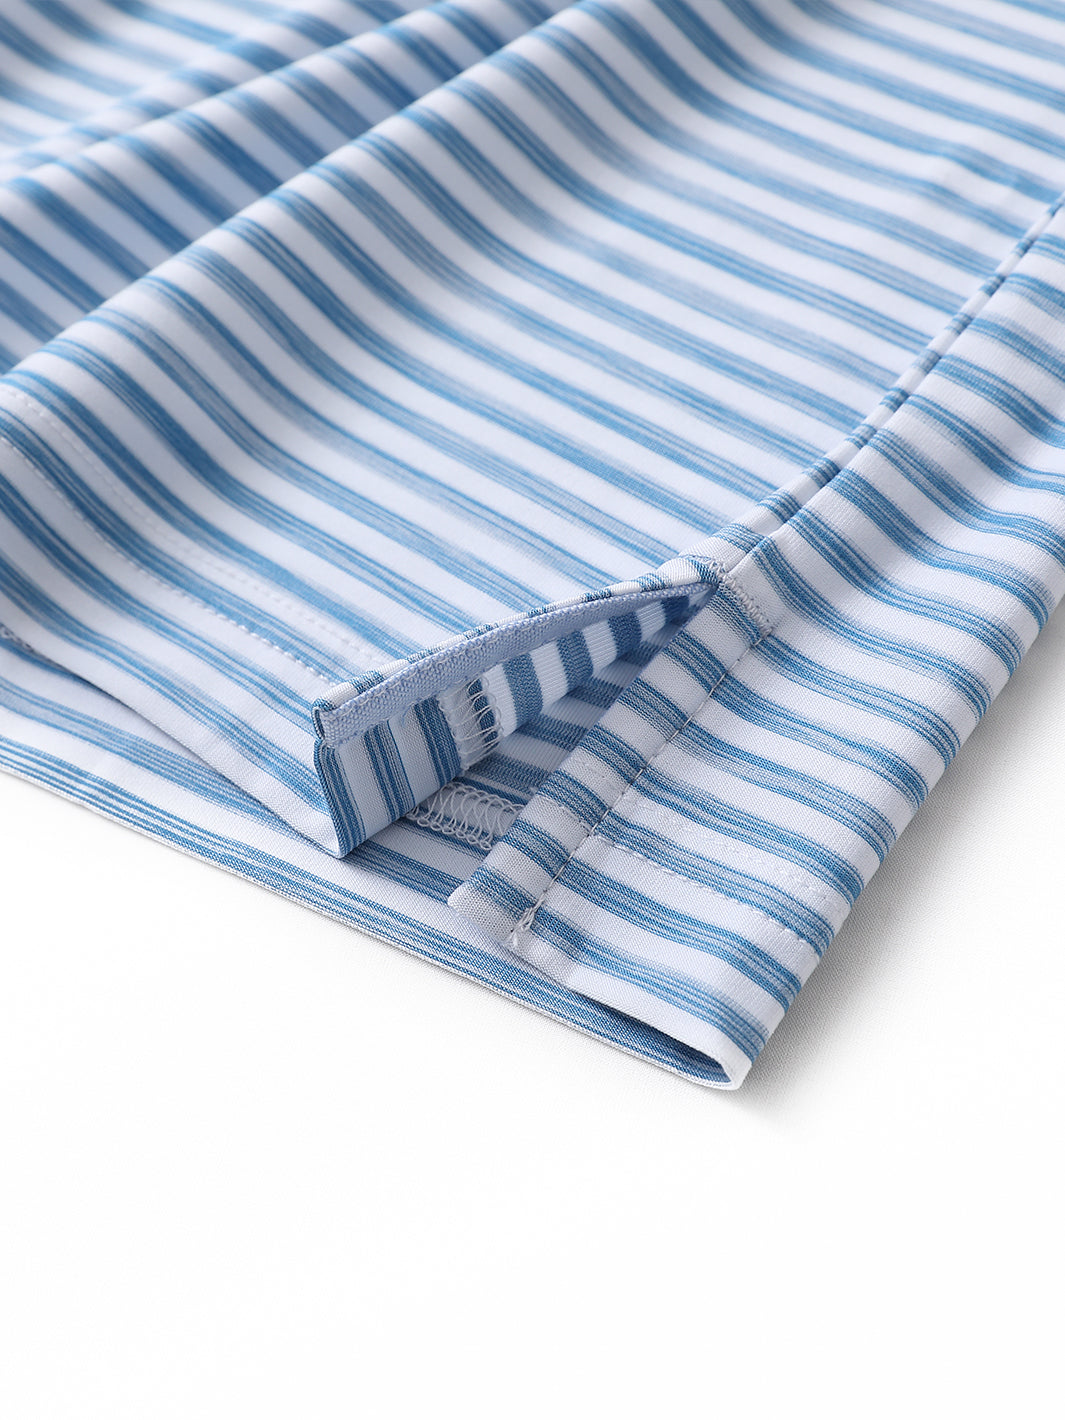 Men's Striped Golf Polo Shirts-Sky Blue White